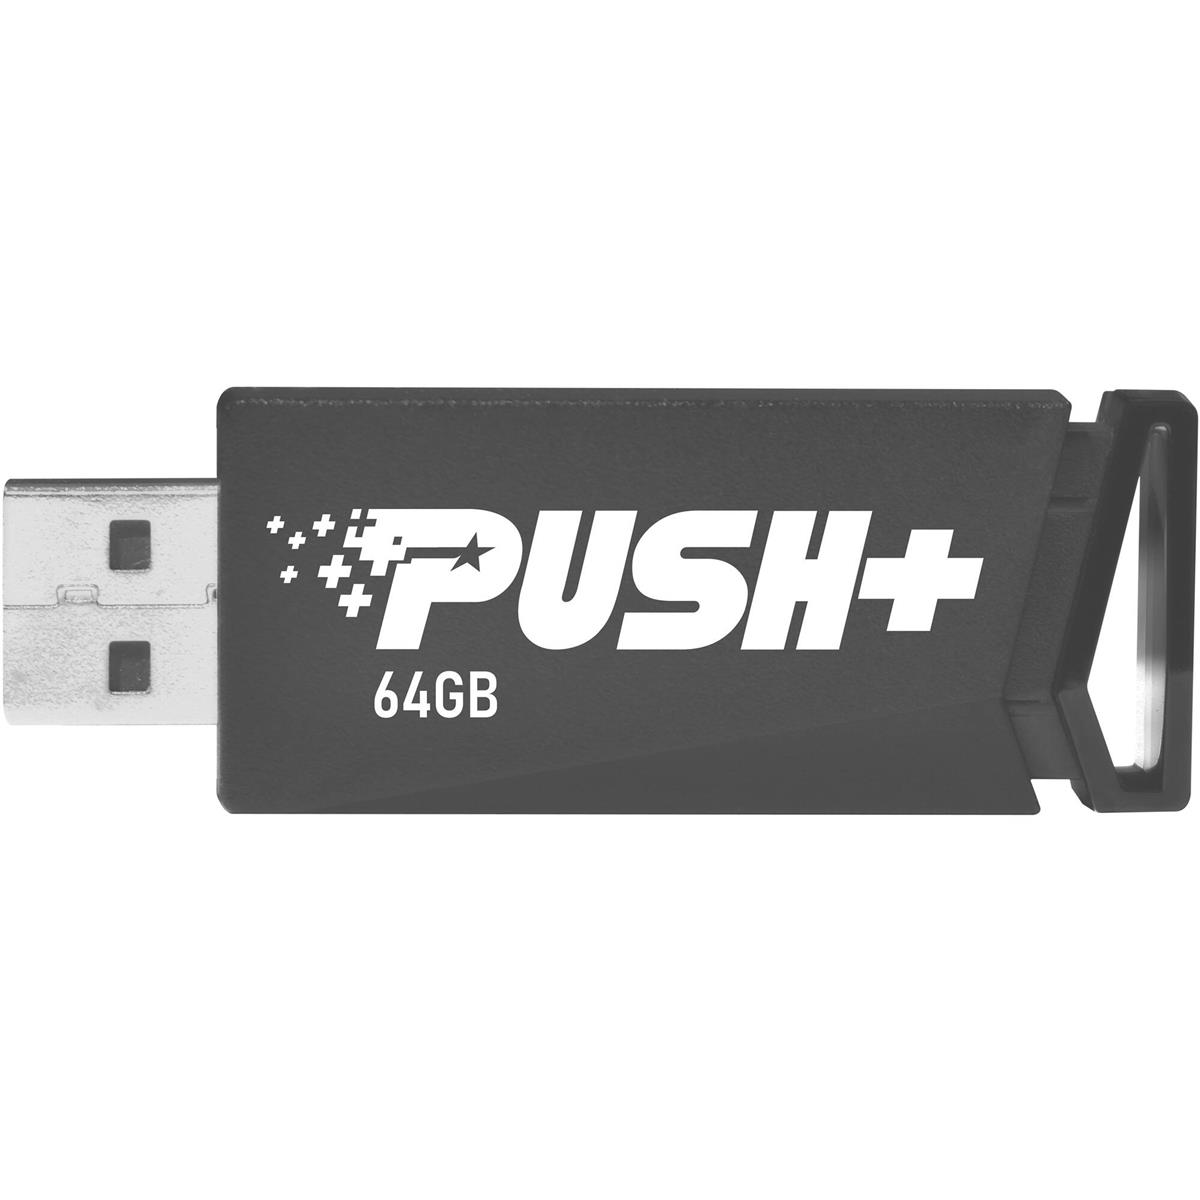 Image of Patriot Memory 64GB Push+ USB 3.2 Gen 1 Flash Drive